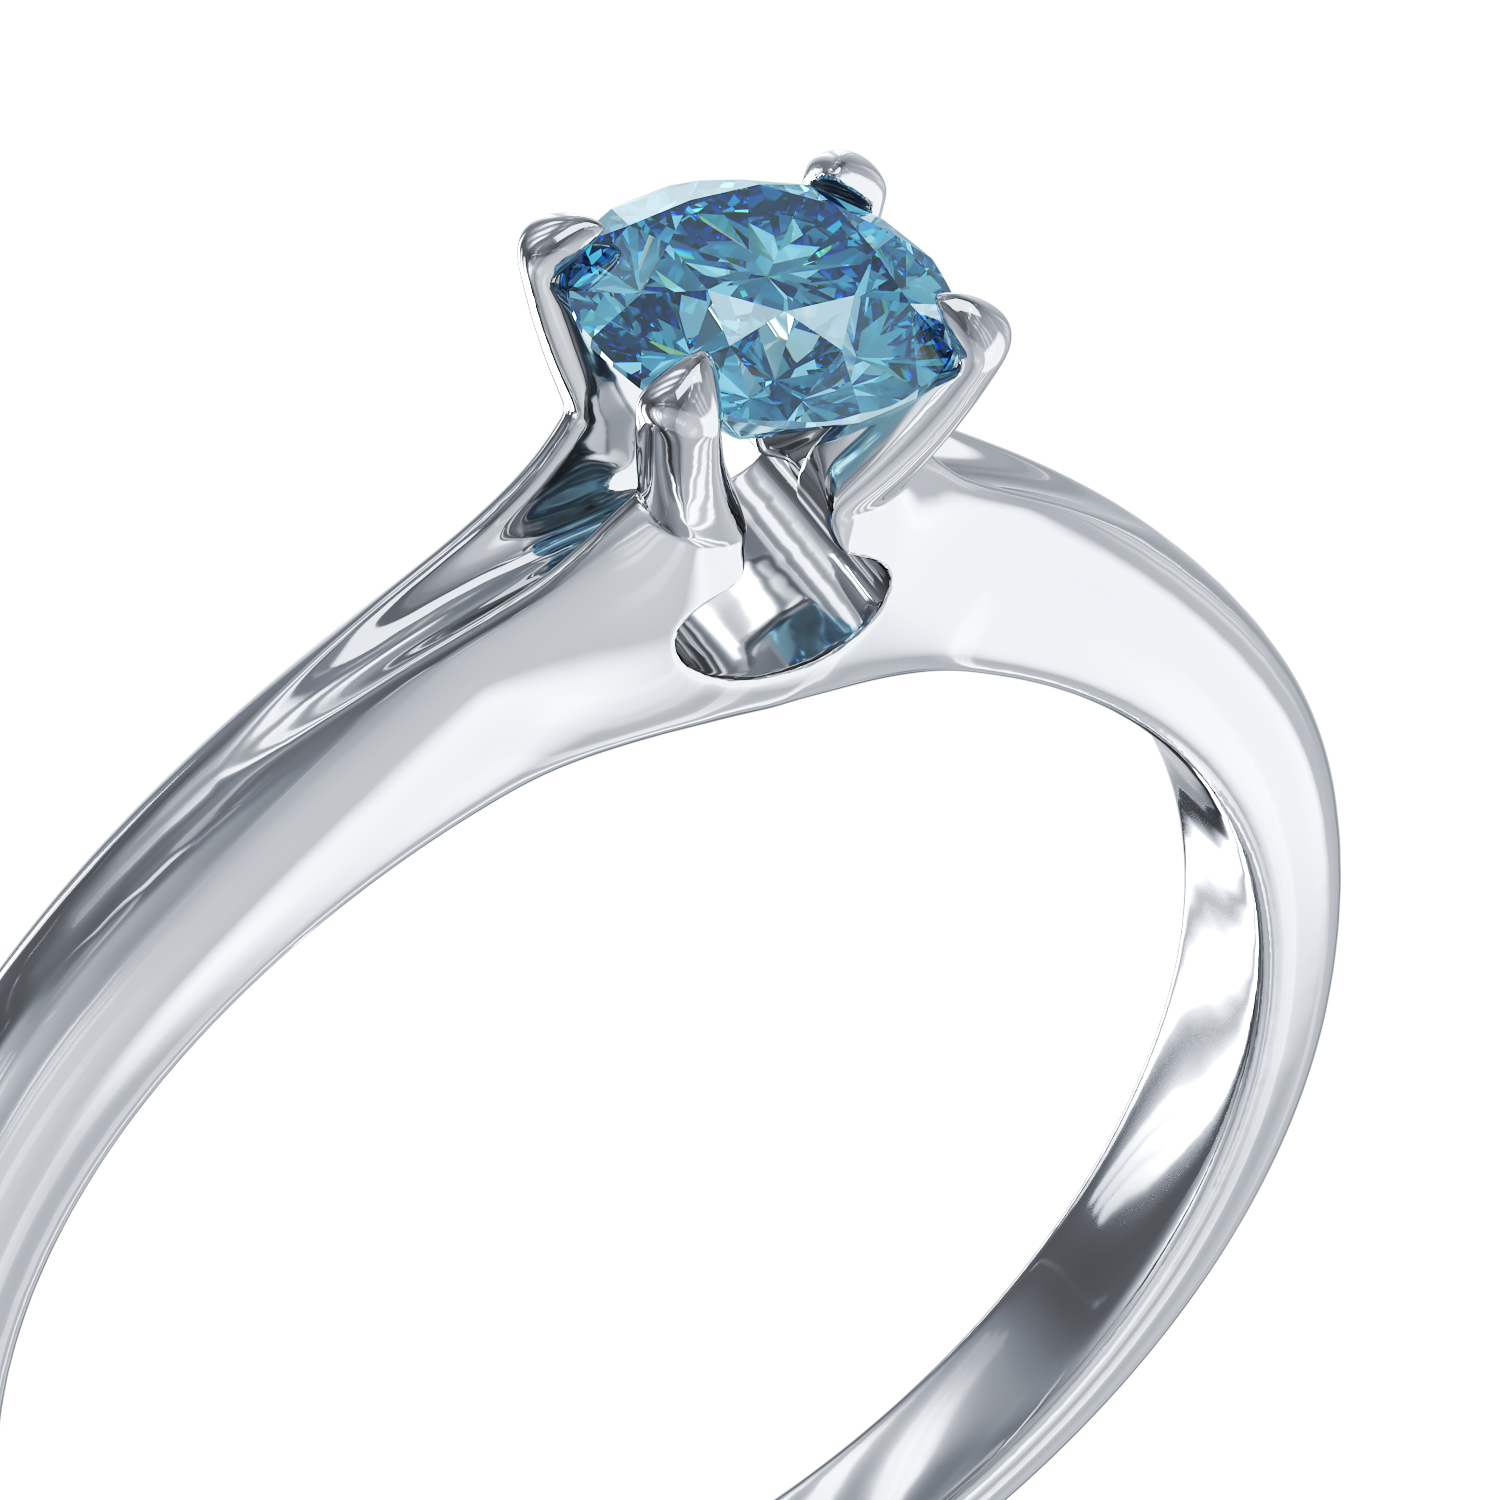 Poze Inel de logodna din aur alb de 18K cu un diamant solitaire albastru de 0.22ct